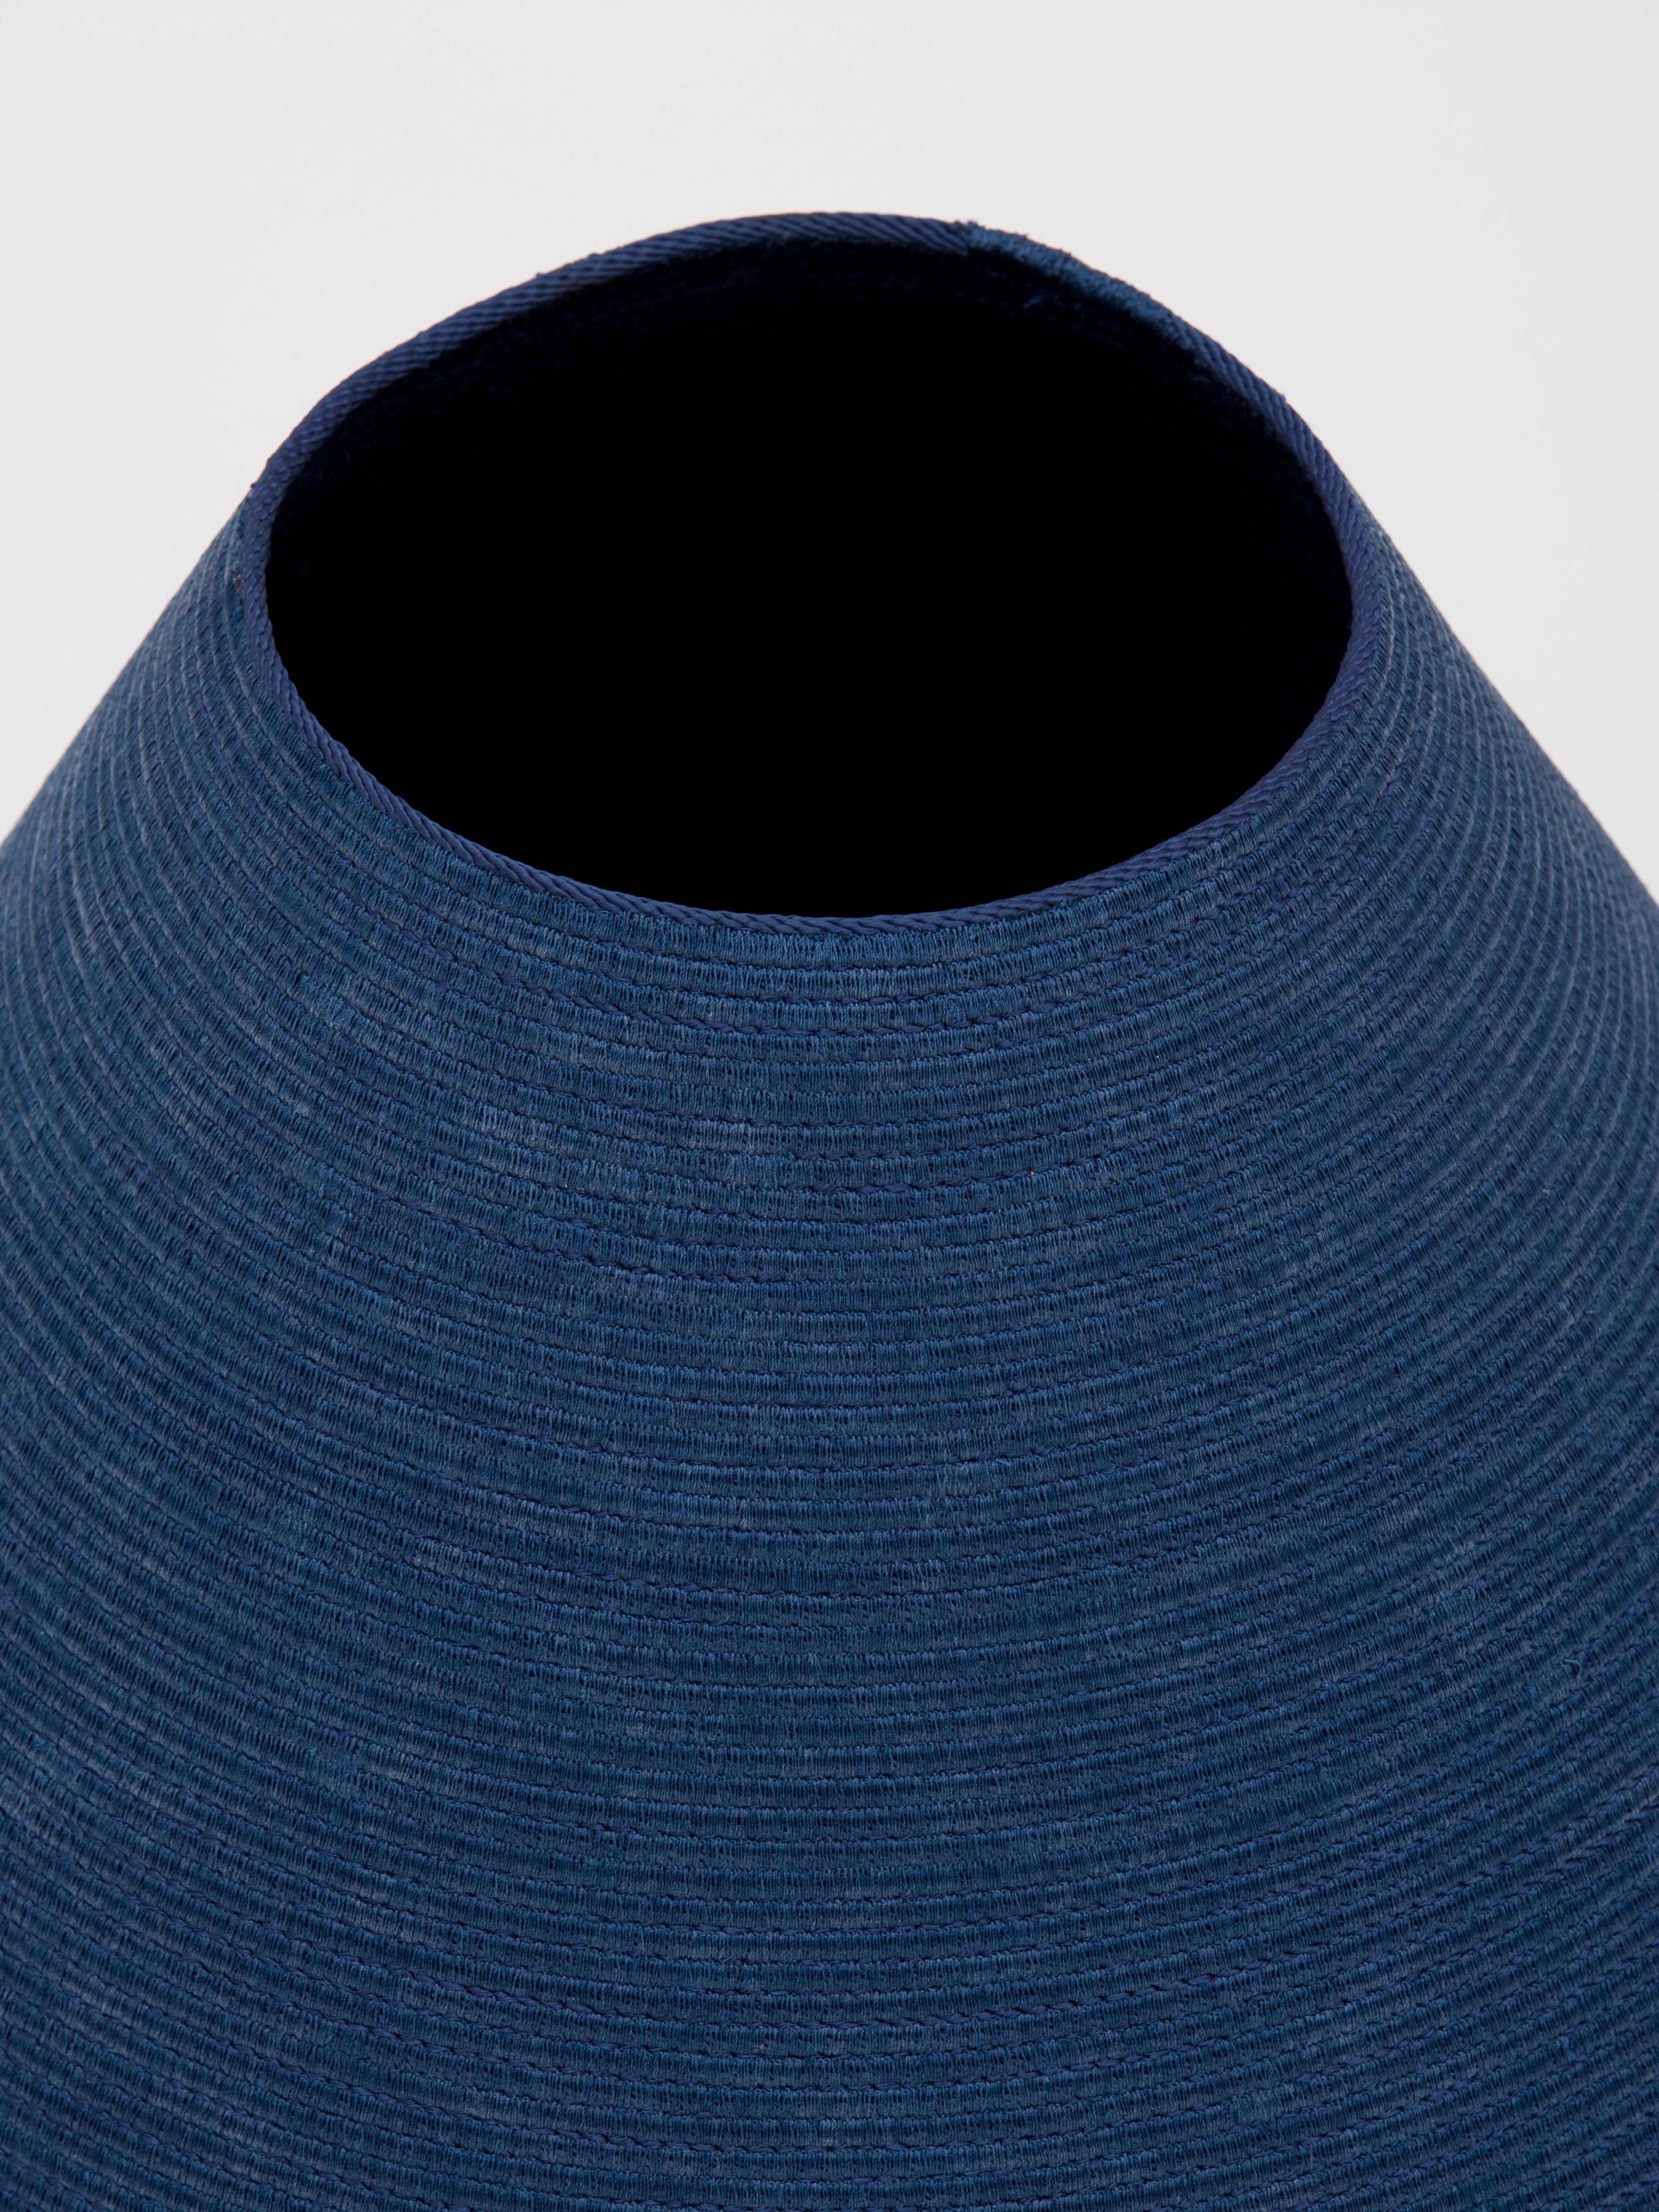 « Kogetsudai (navy) », récipient sculptural en fibre de corde enroulé de Doug Johnston, 2015 Bon état à Brooklyn, NY